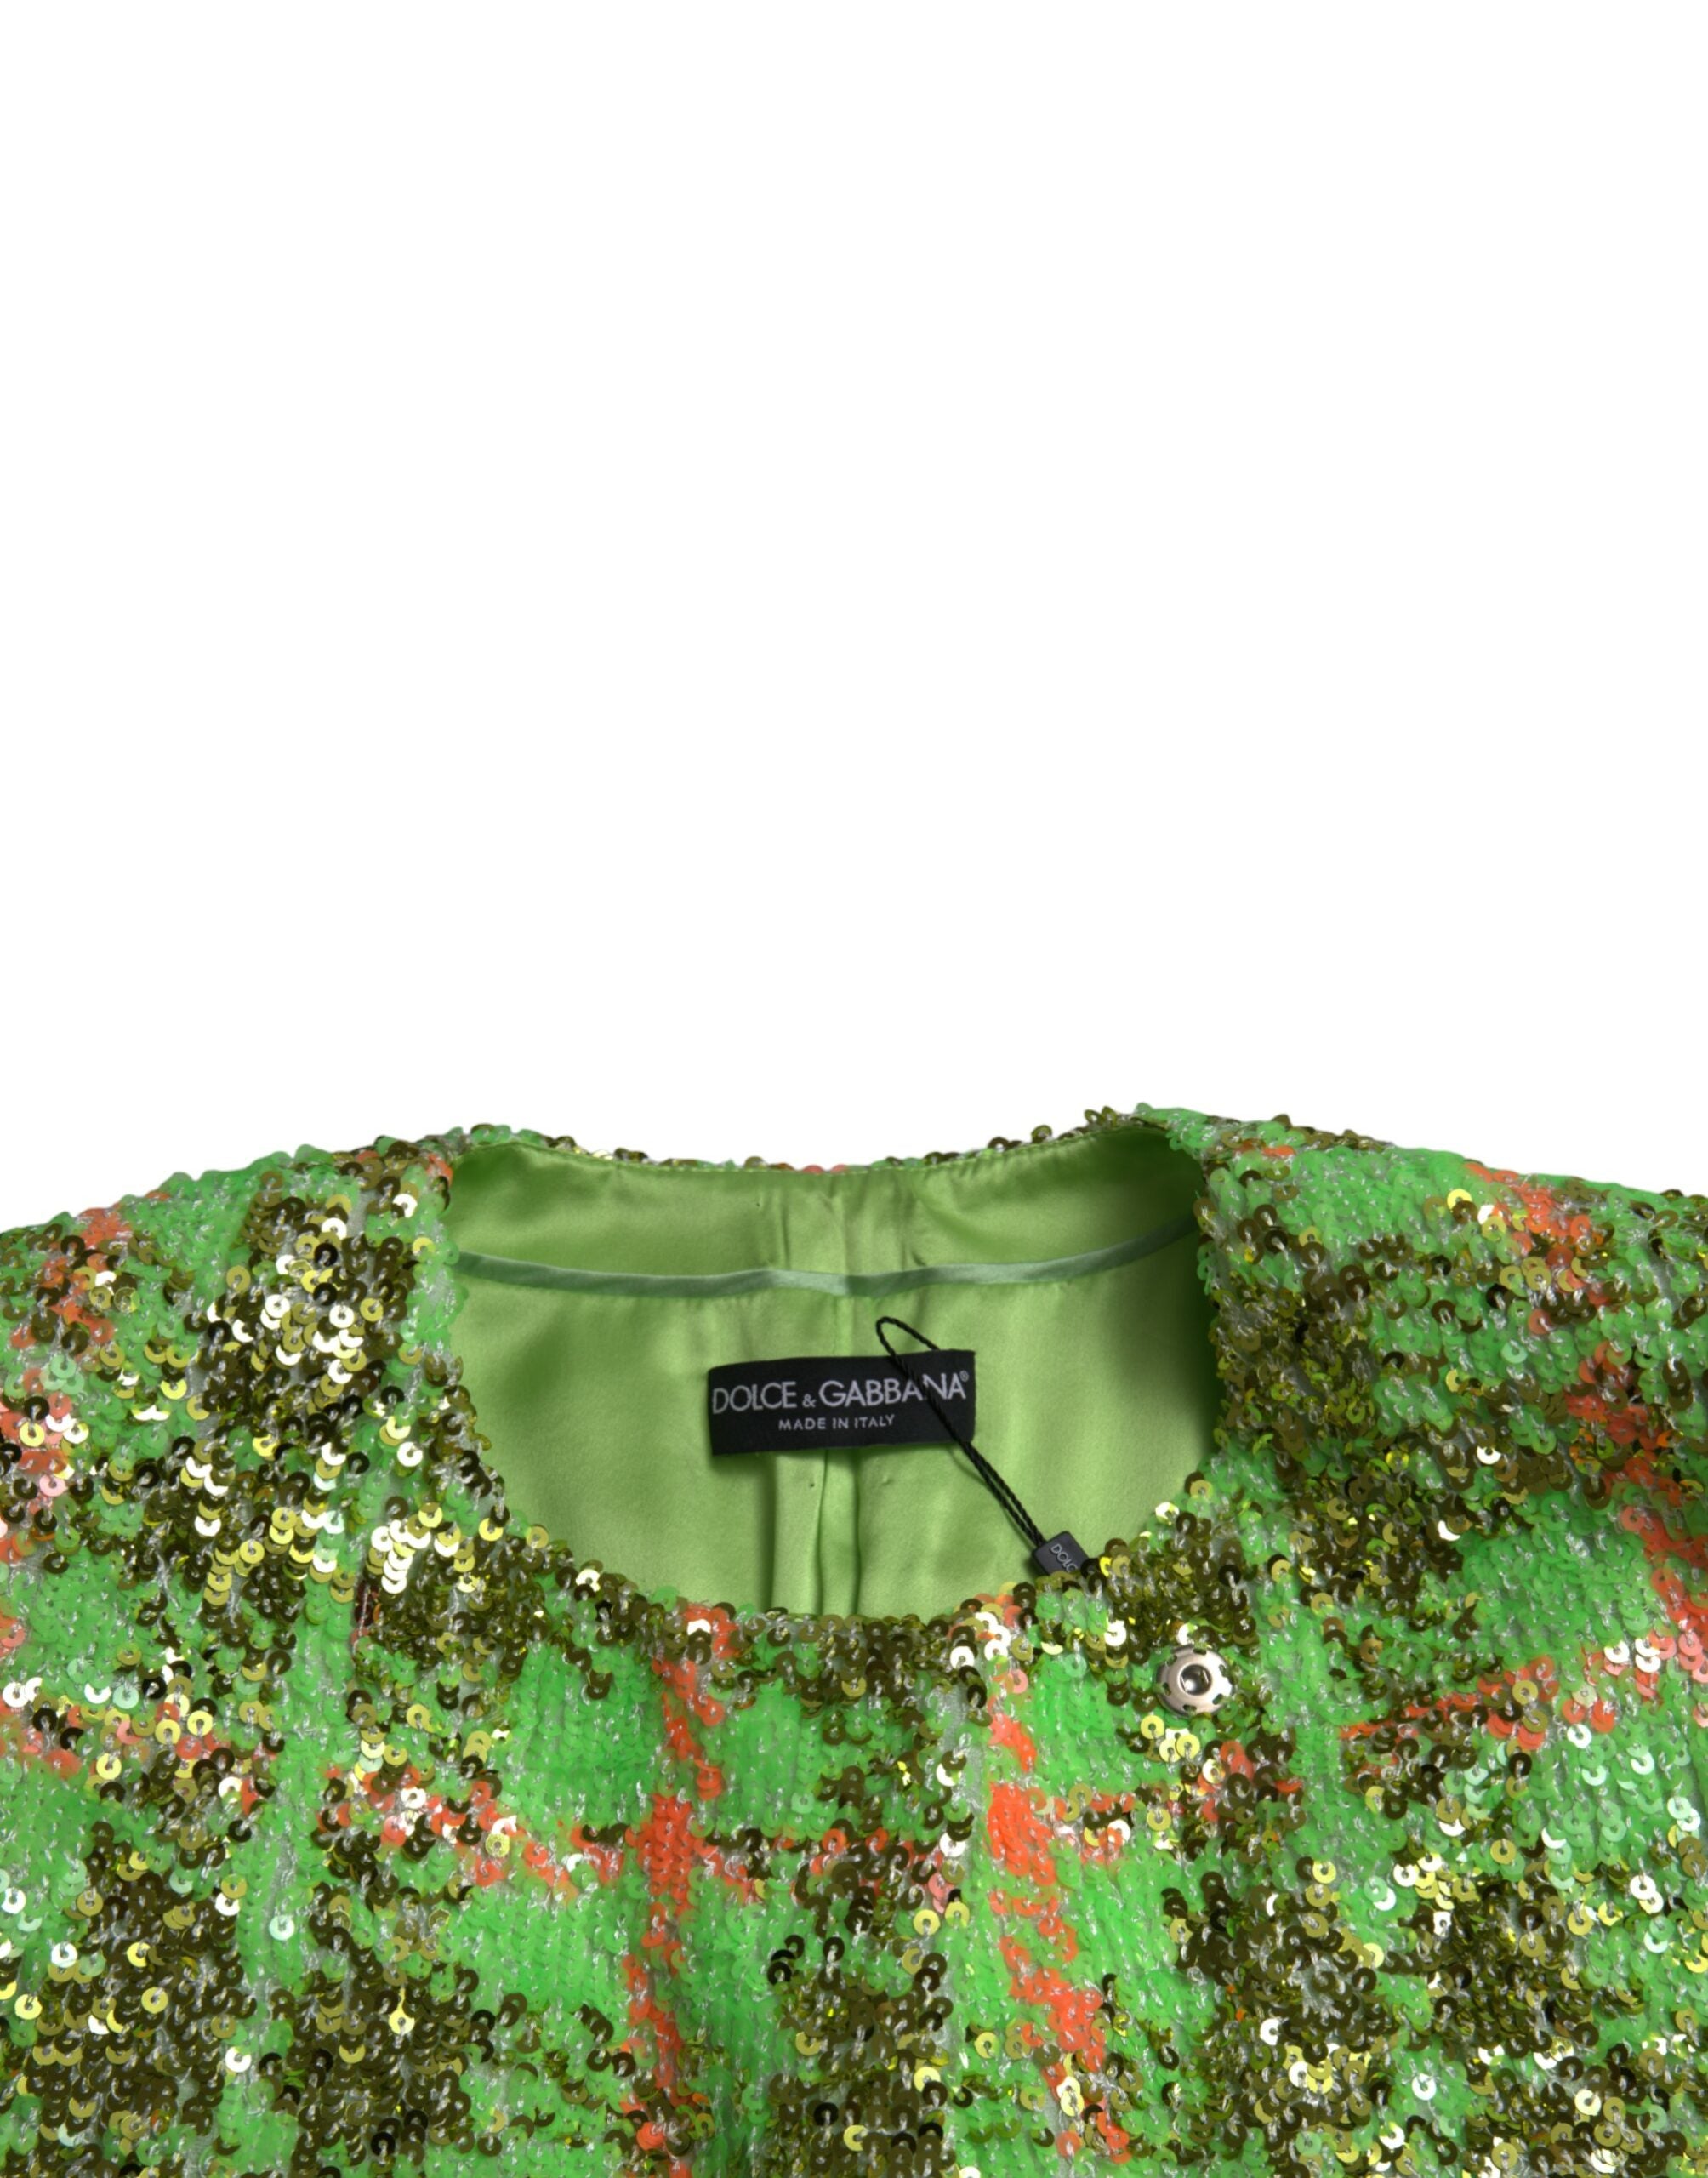 Dolce & Gabbana Exquisite Sequined Long Coat Jacket in Green